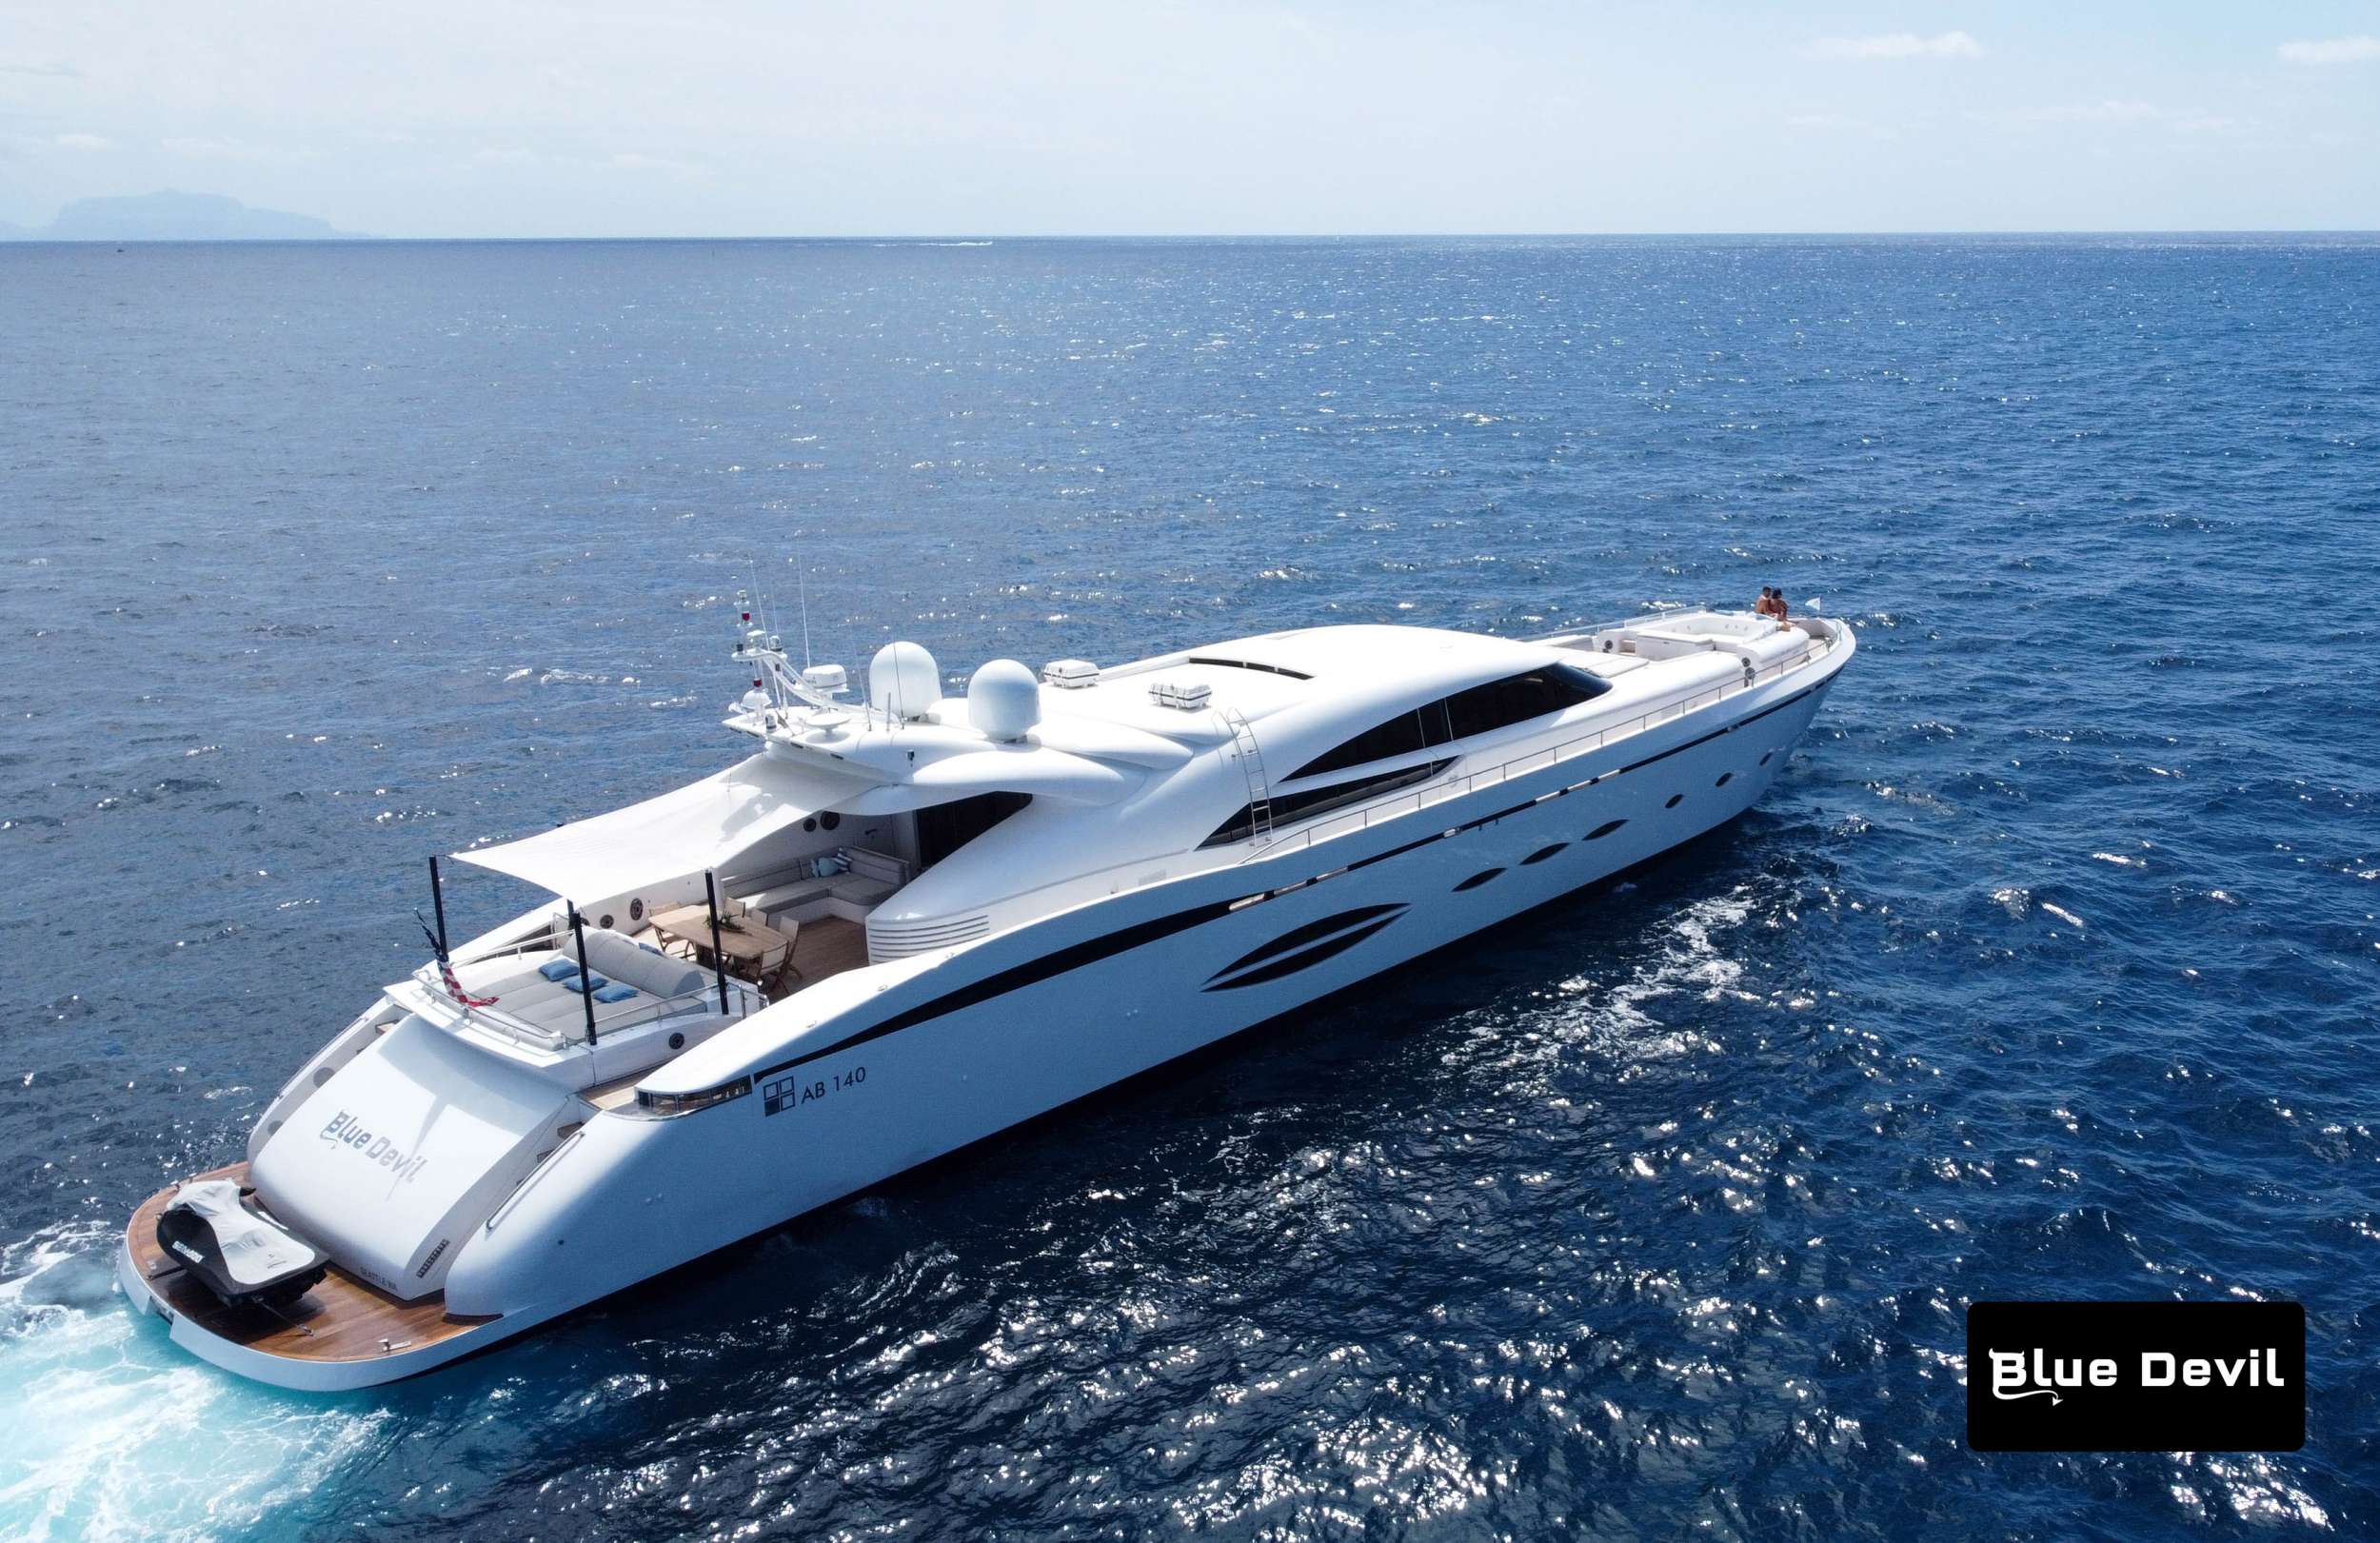 Blue Devil - Superyacht charter worldwide & Boat hire in Bahamas 1